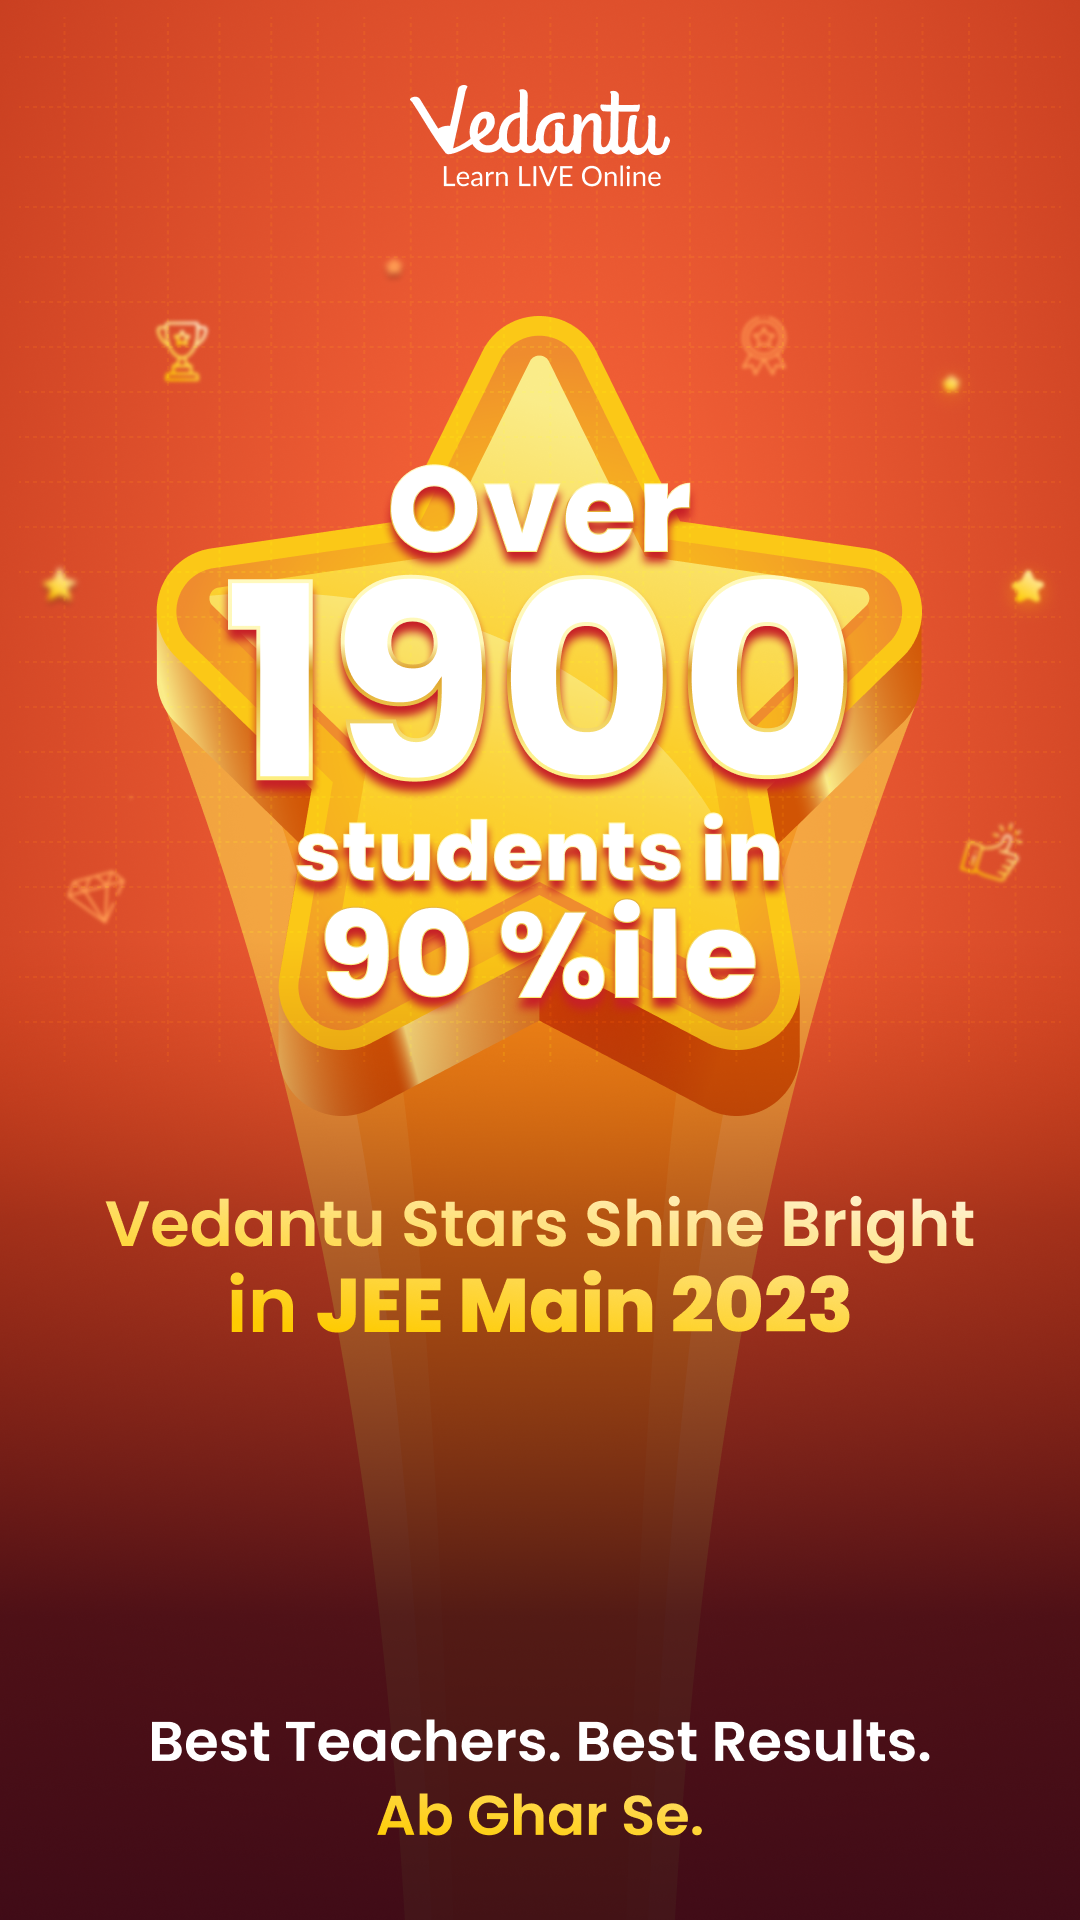 Vedantu Stars Shine Bright in JEE Main 2023